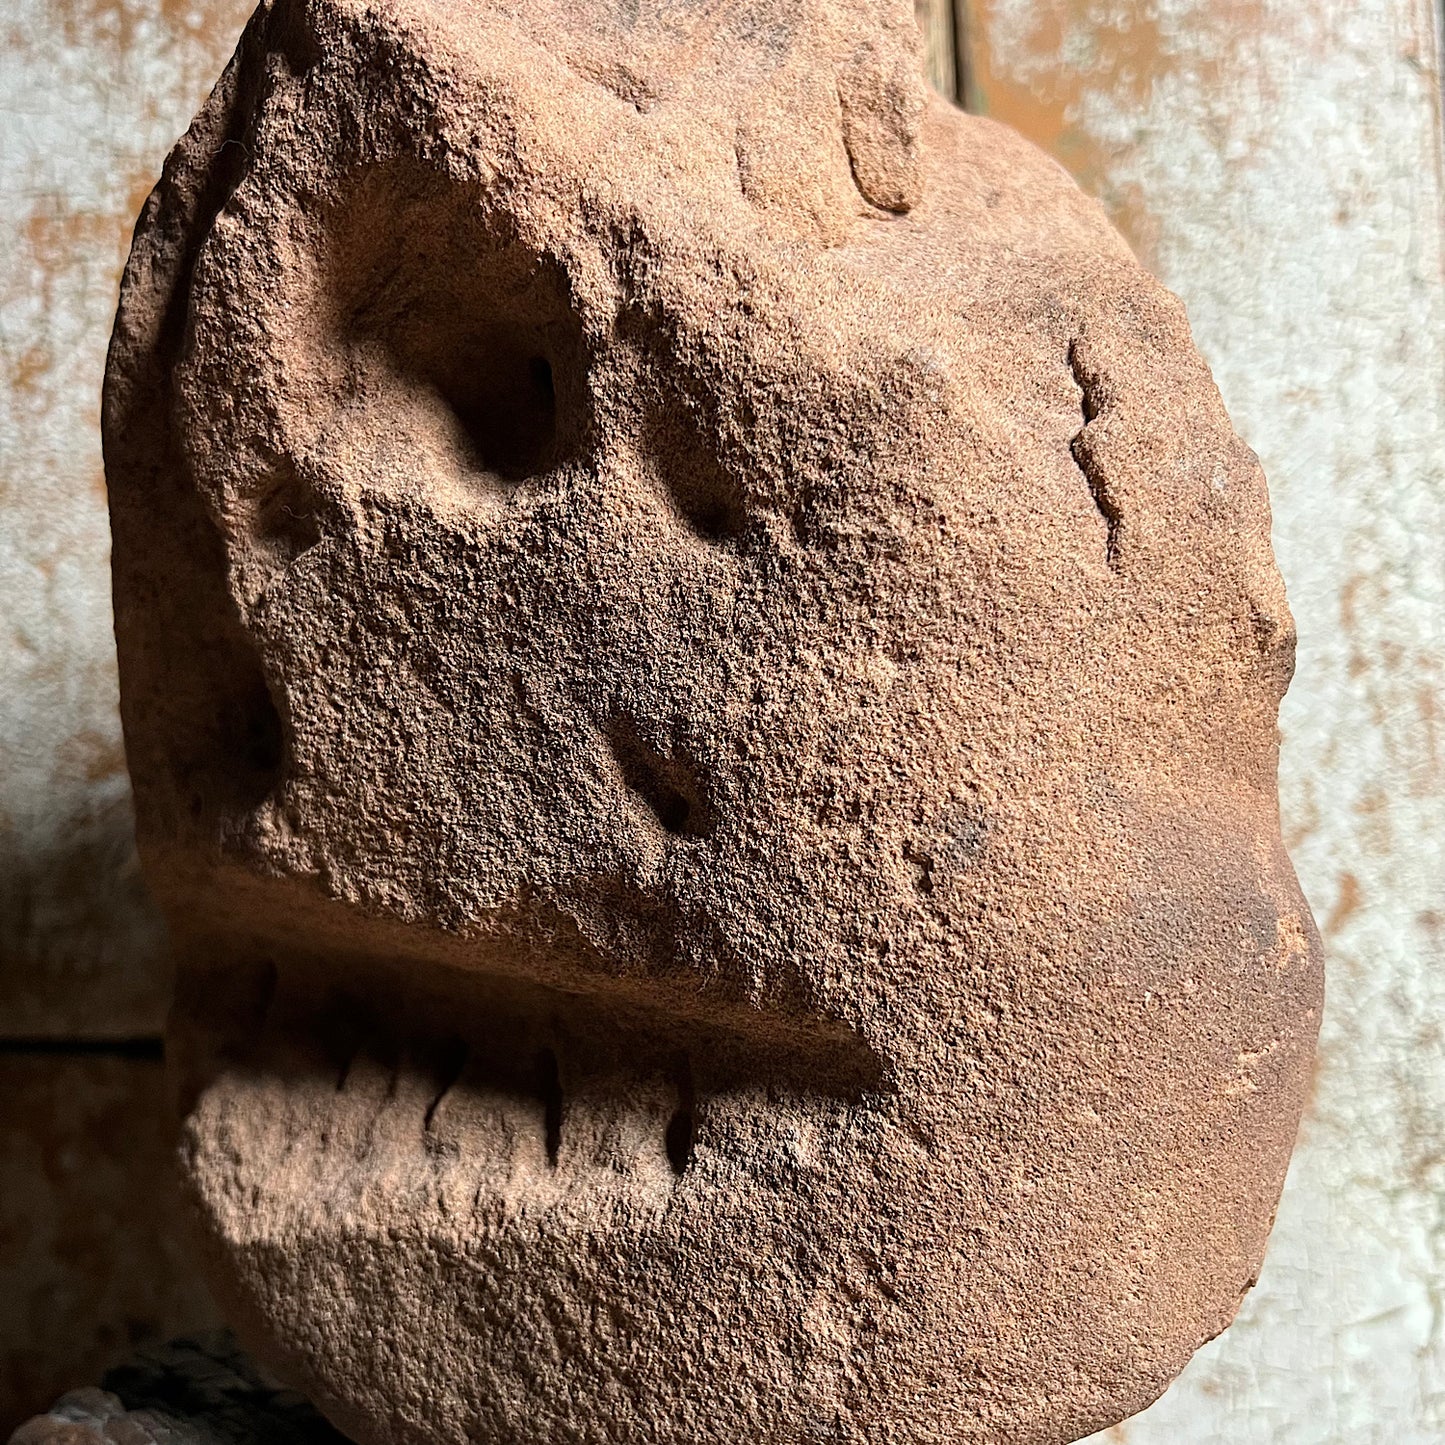 Large Celtic Stone Head